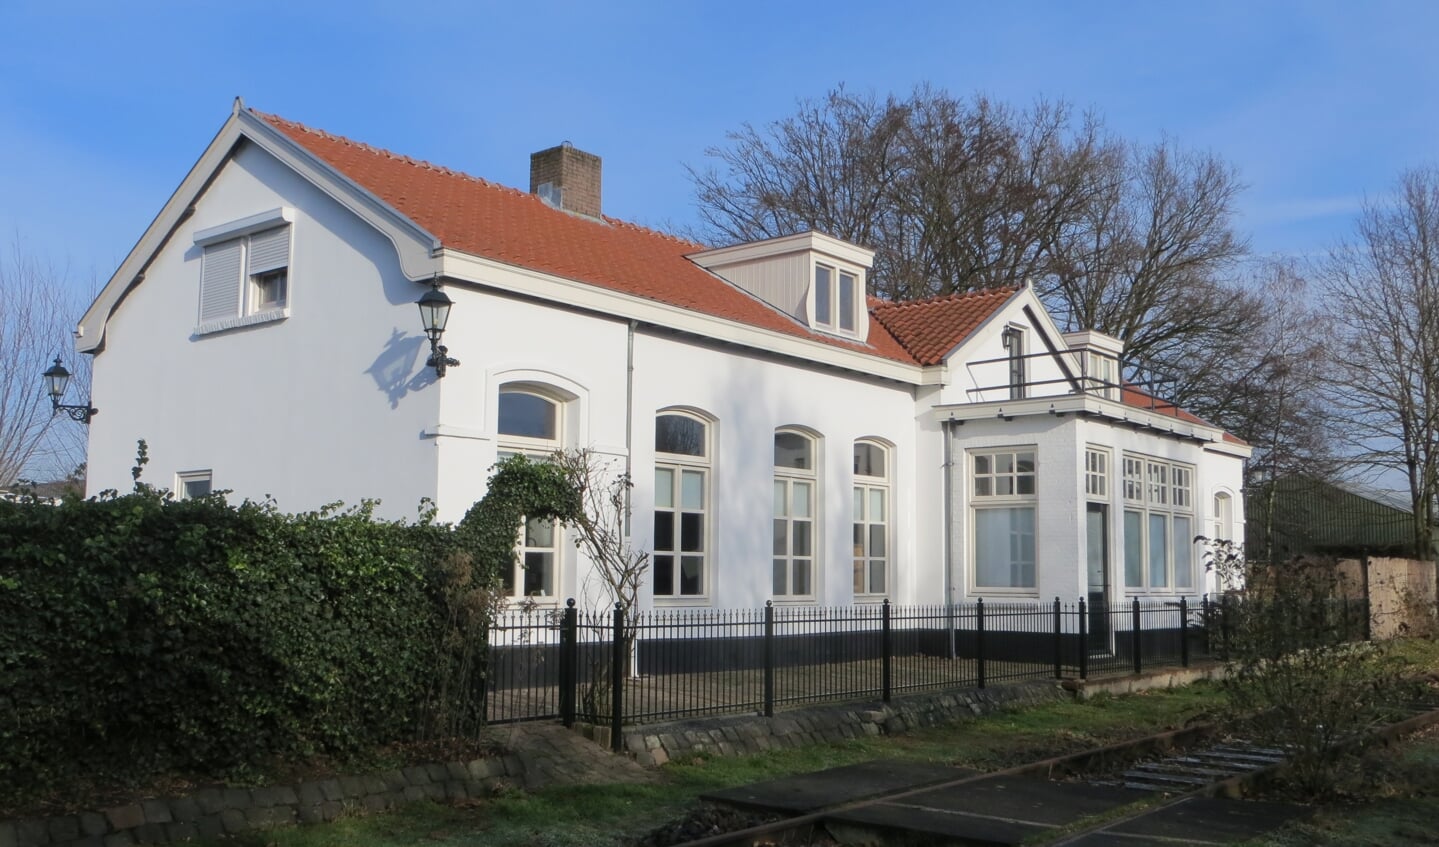 Station Schijndel.